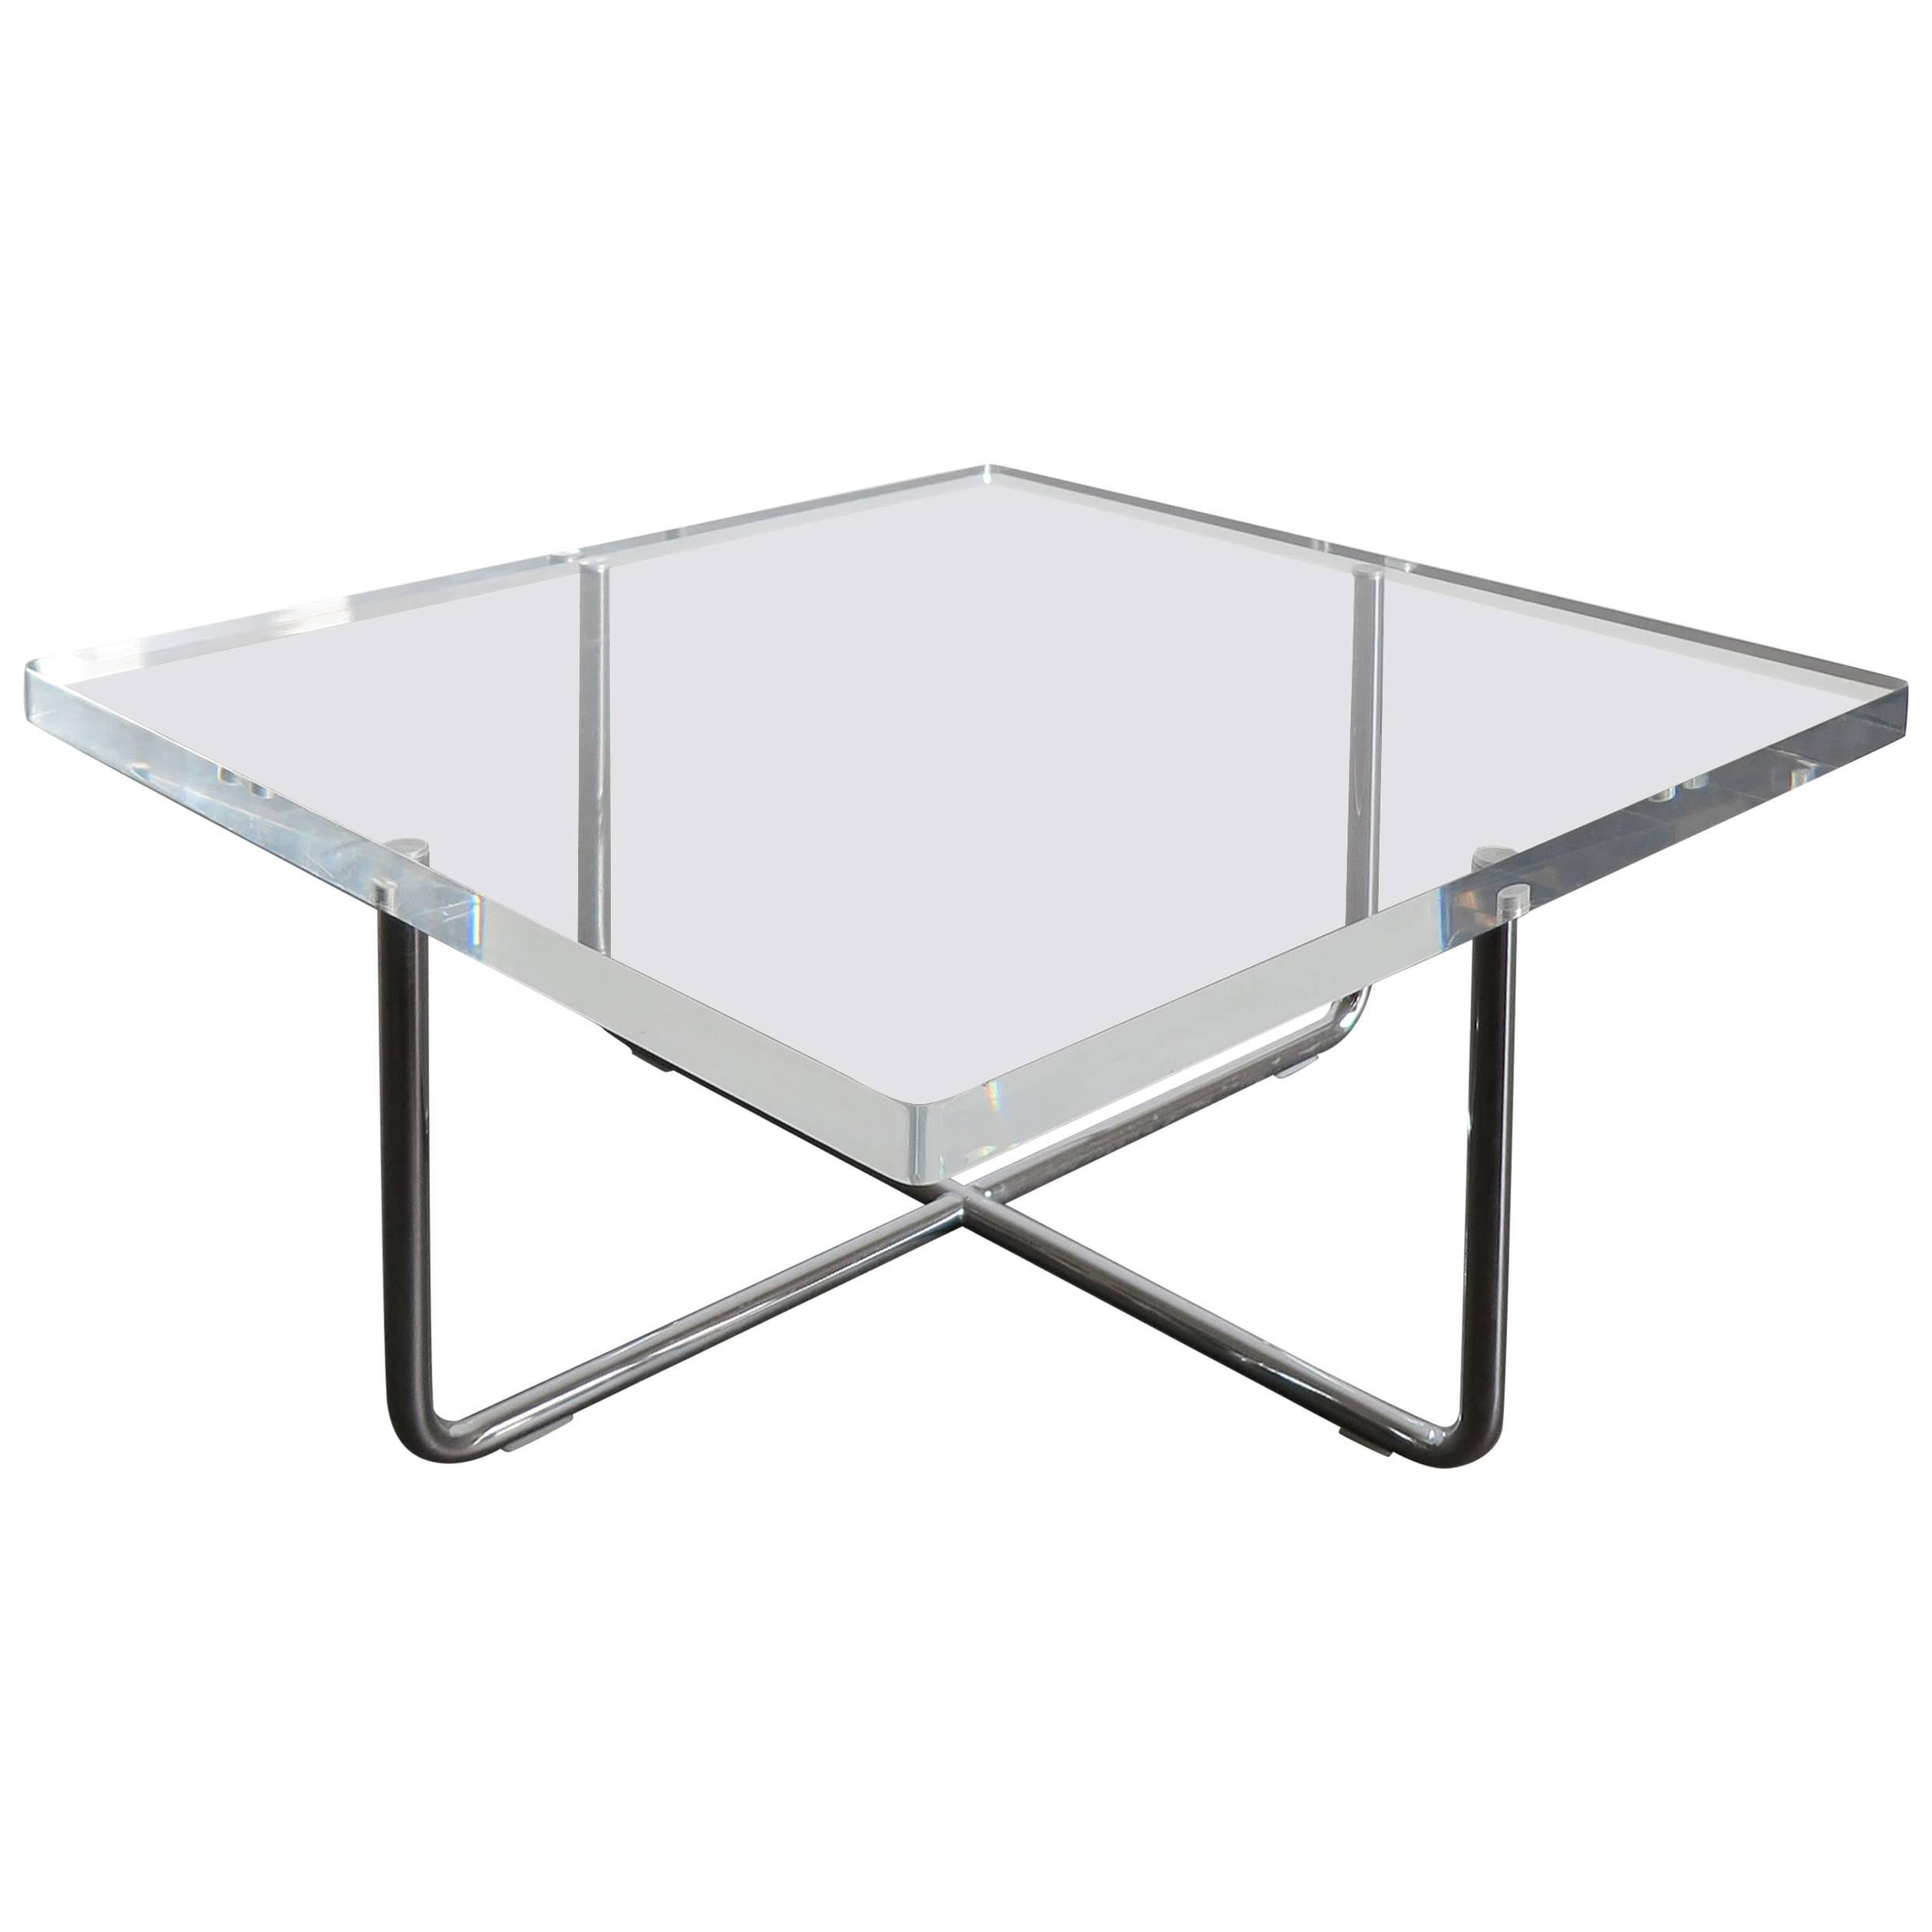 1990s Italian Square Plexiglass Modern Coffee Table Produced by Minotti